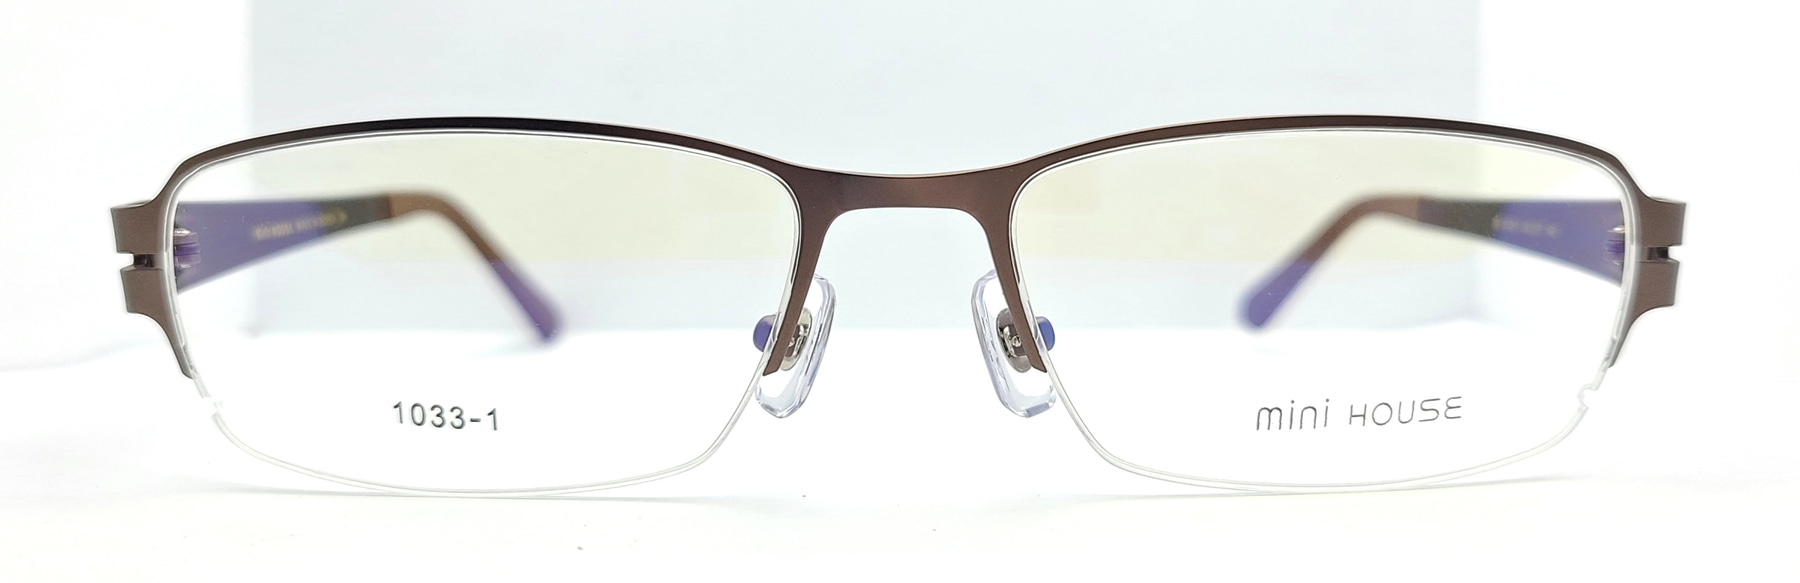 MINIHOUSE M-1033-1, Korean glasses, sunglasses, eyeglasses, glasses